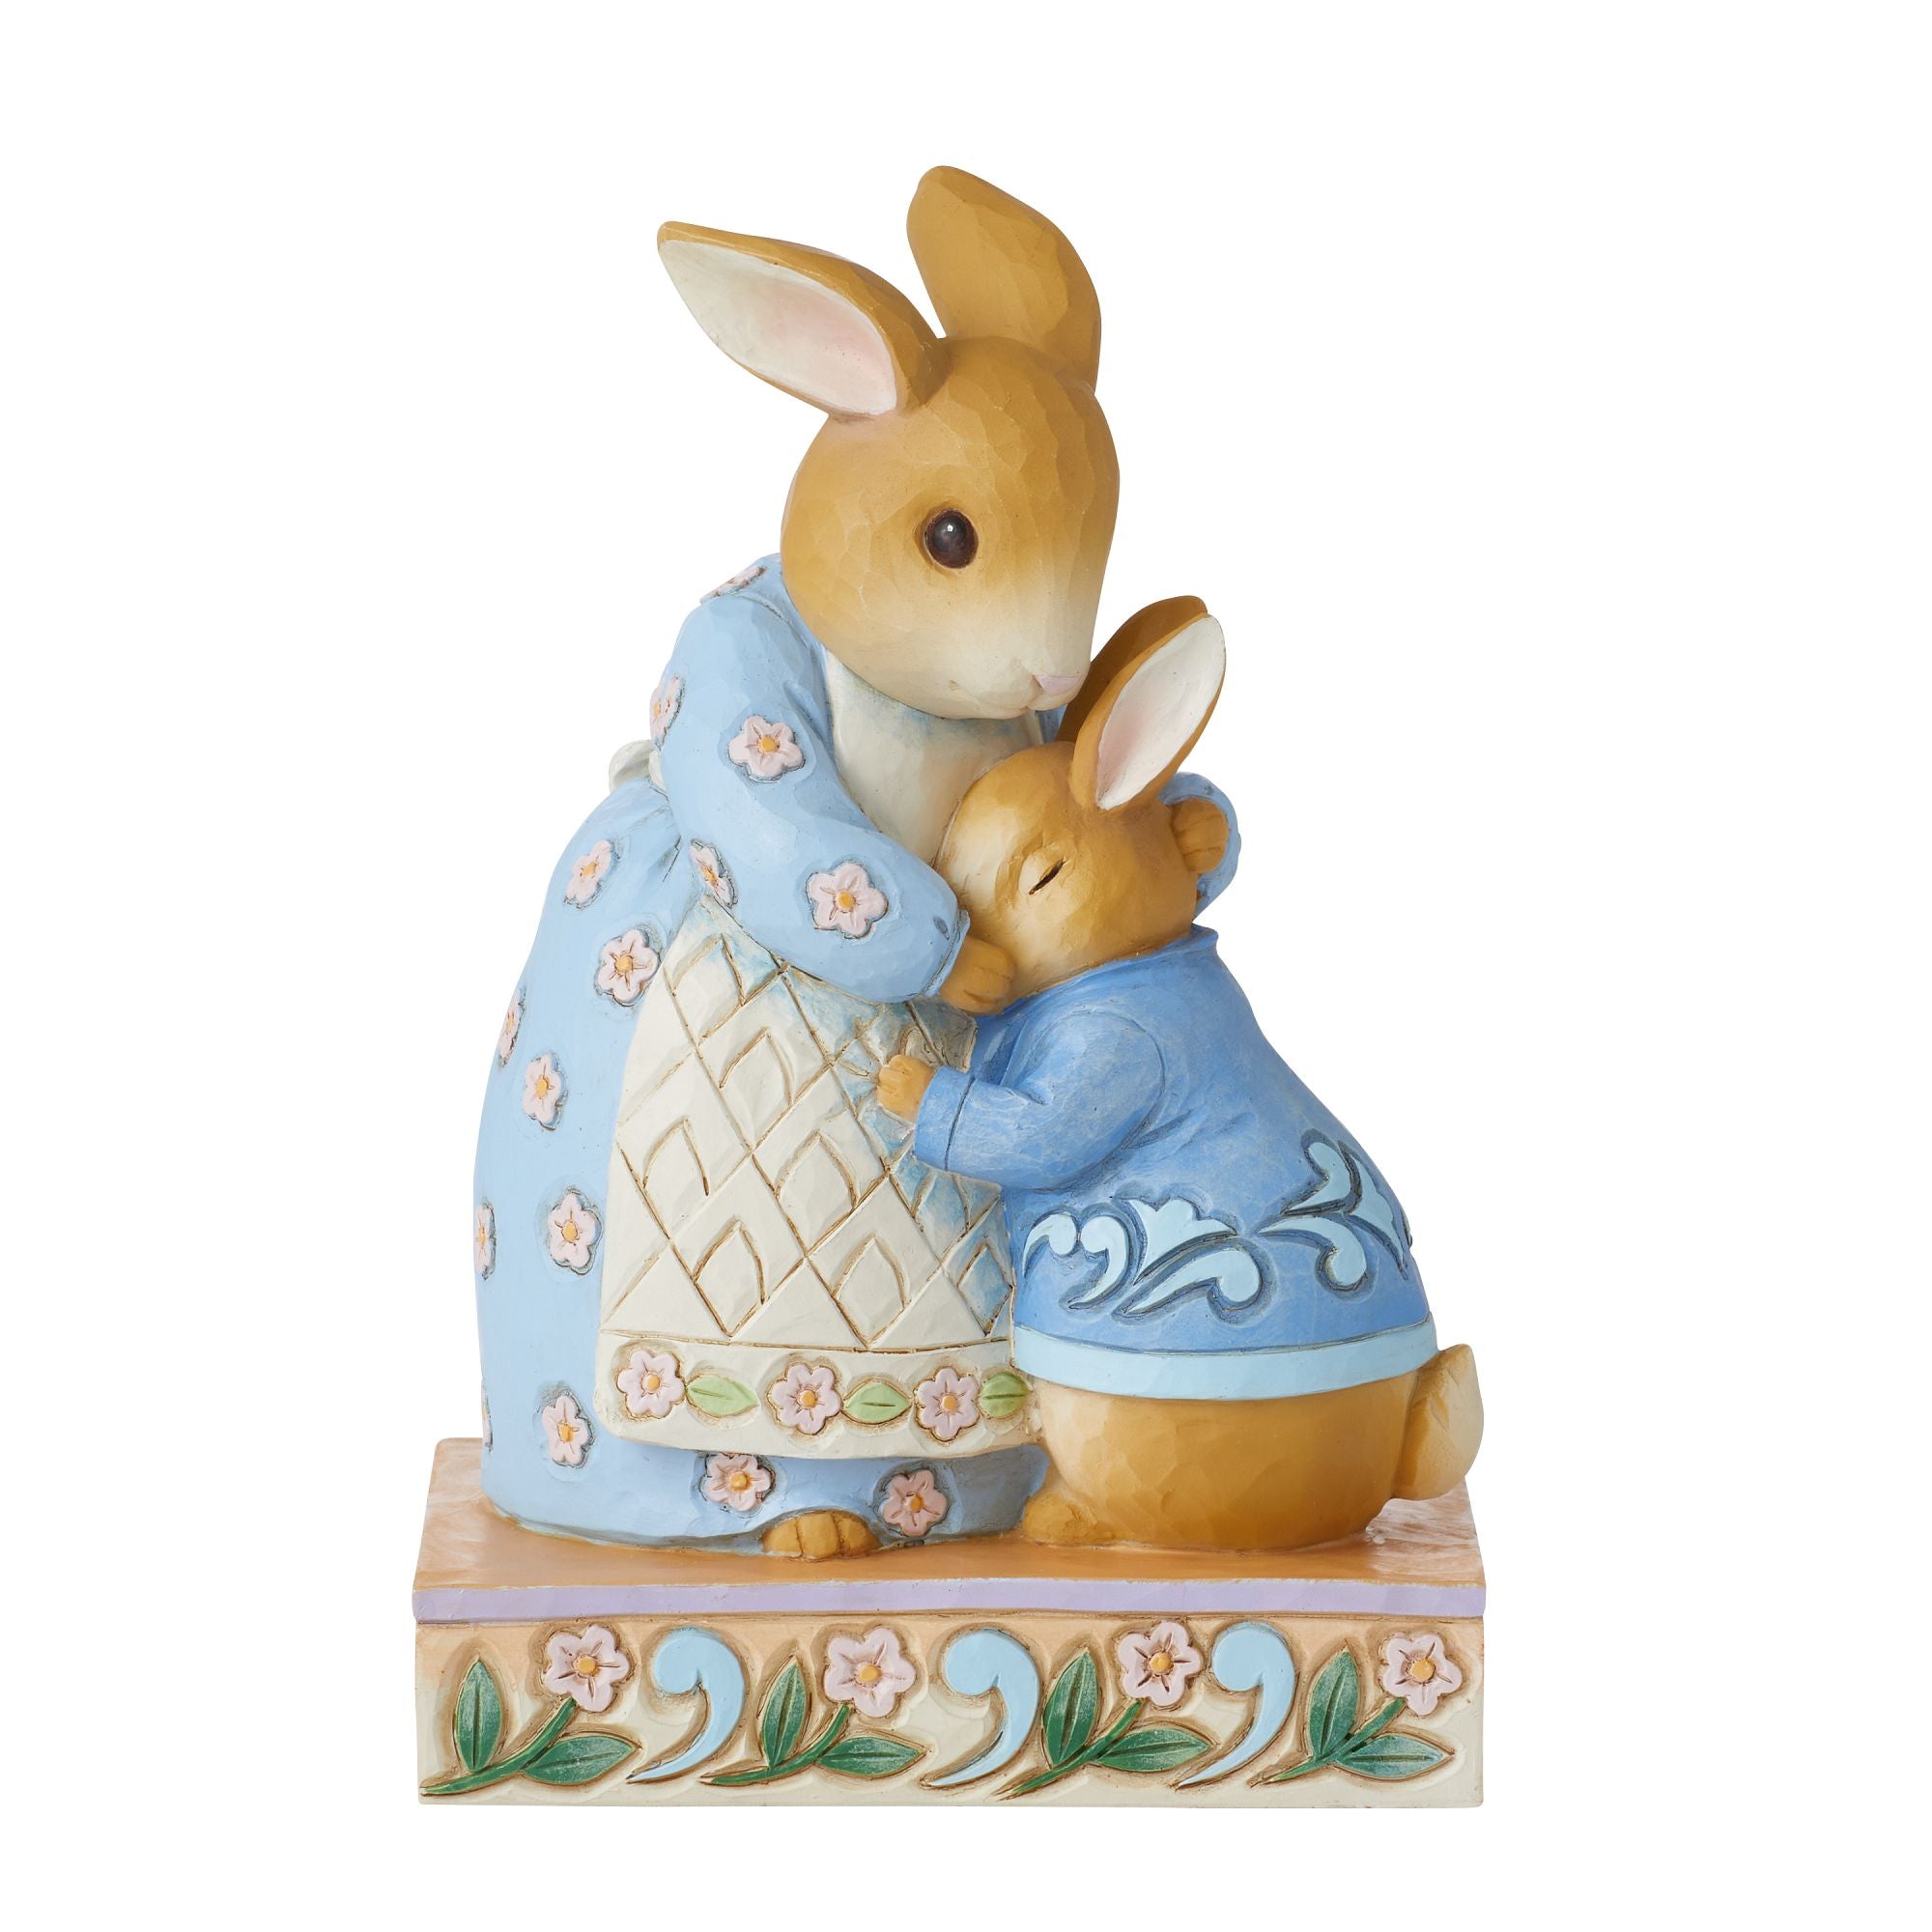 Mrs. Rabbit and Peter Rabbit – Jim Shore